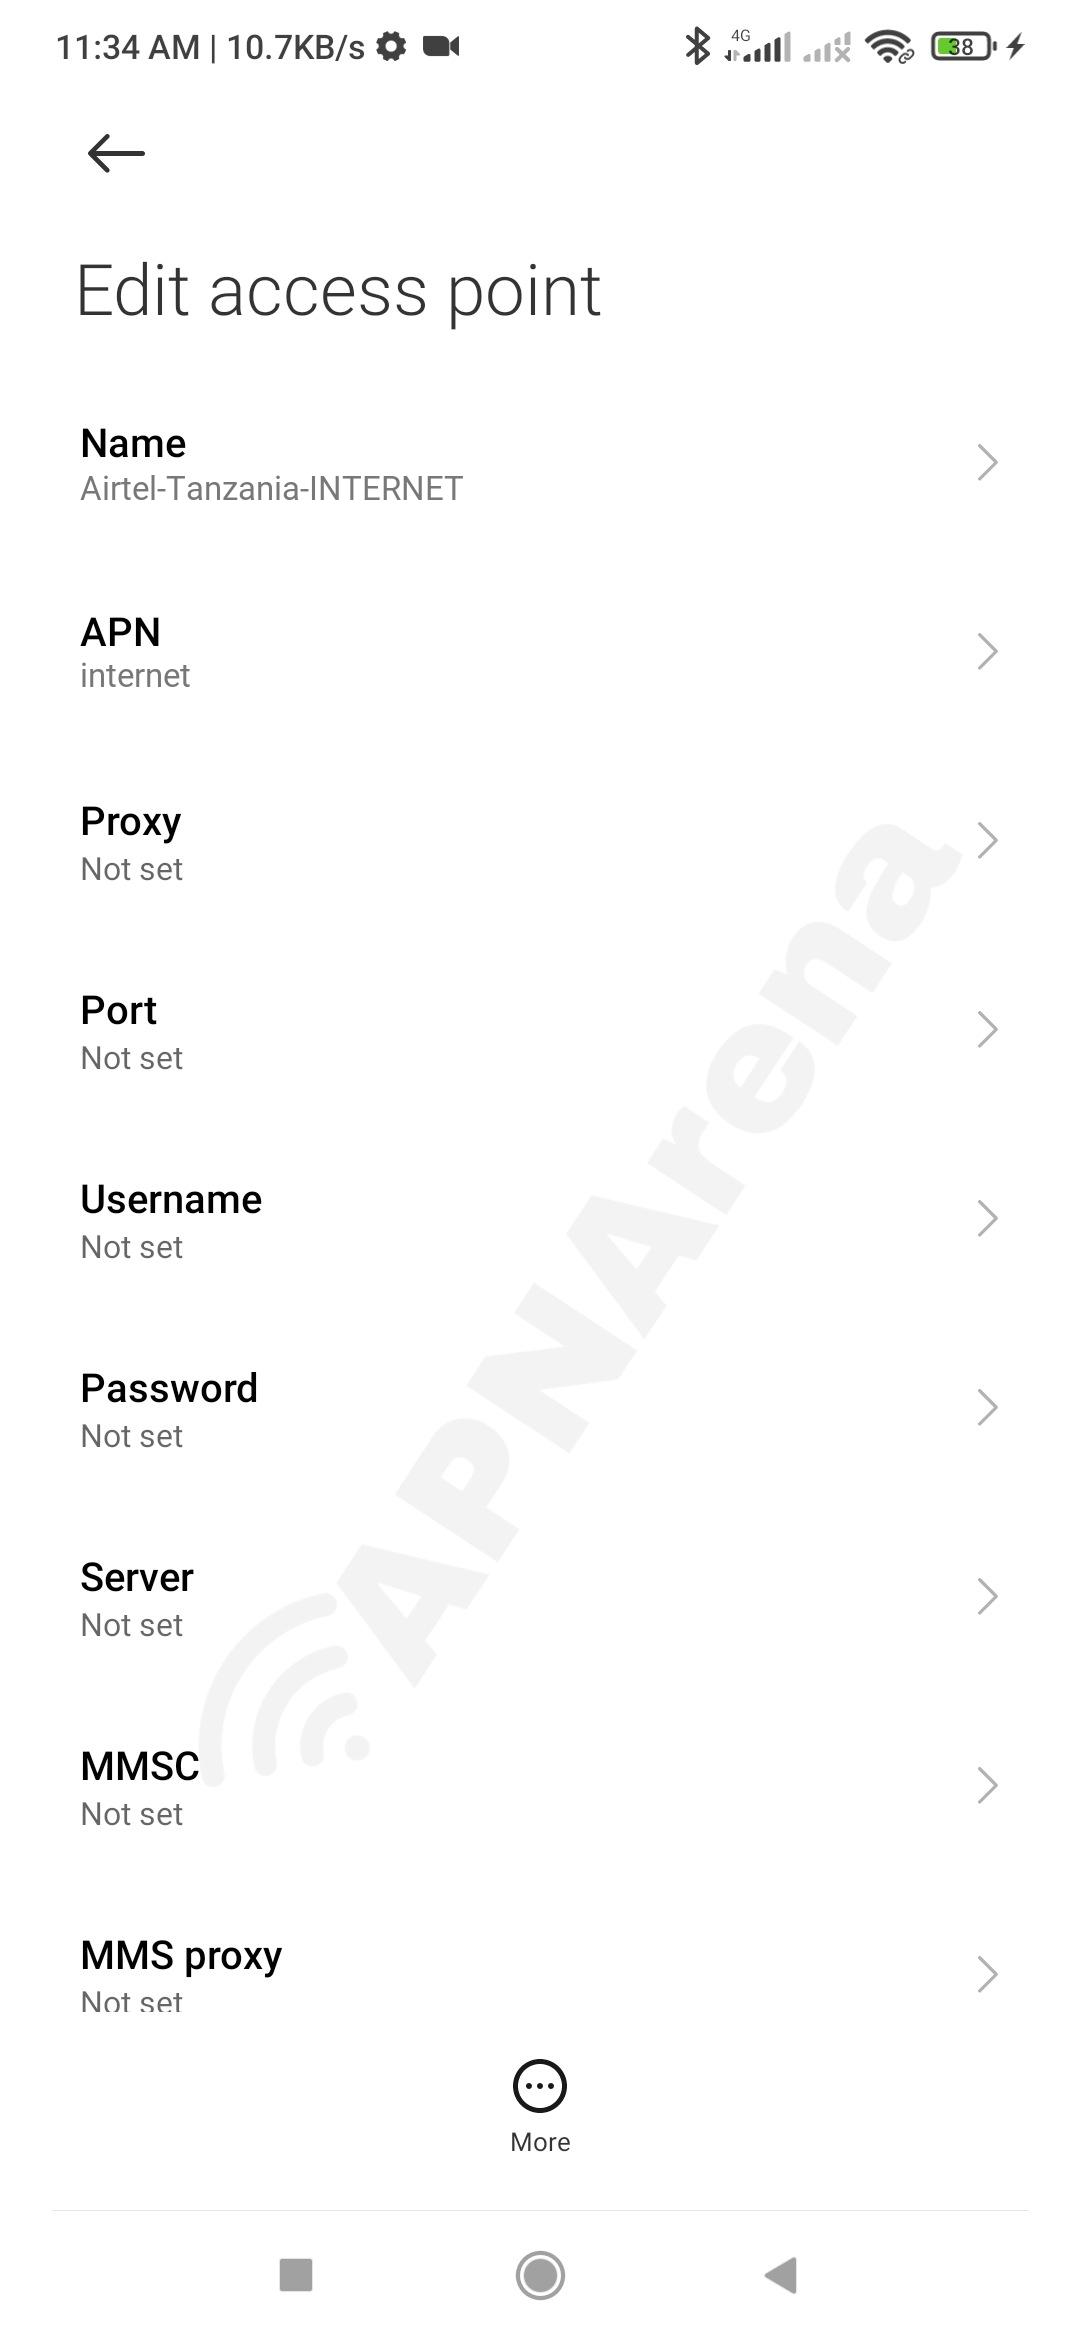 Airtel Tanzania (Zain) APN Settings for Android